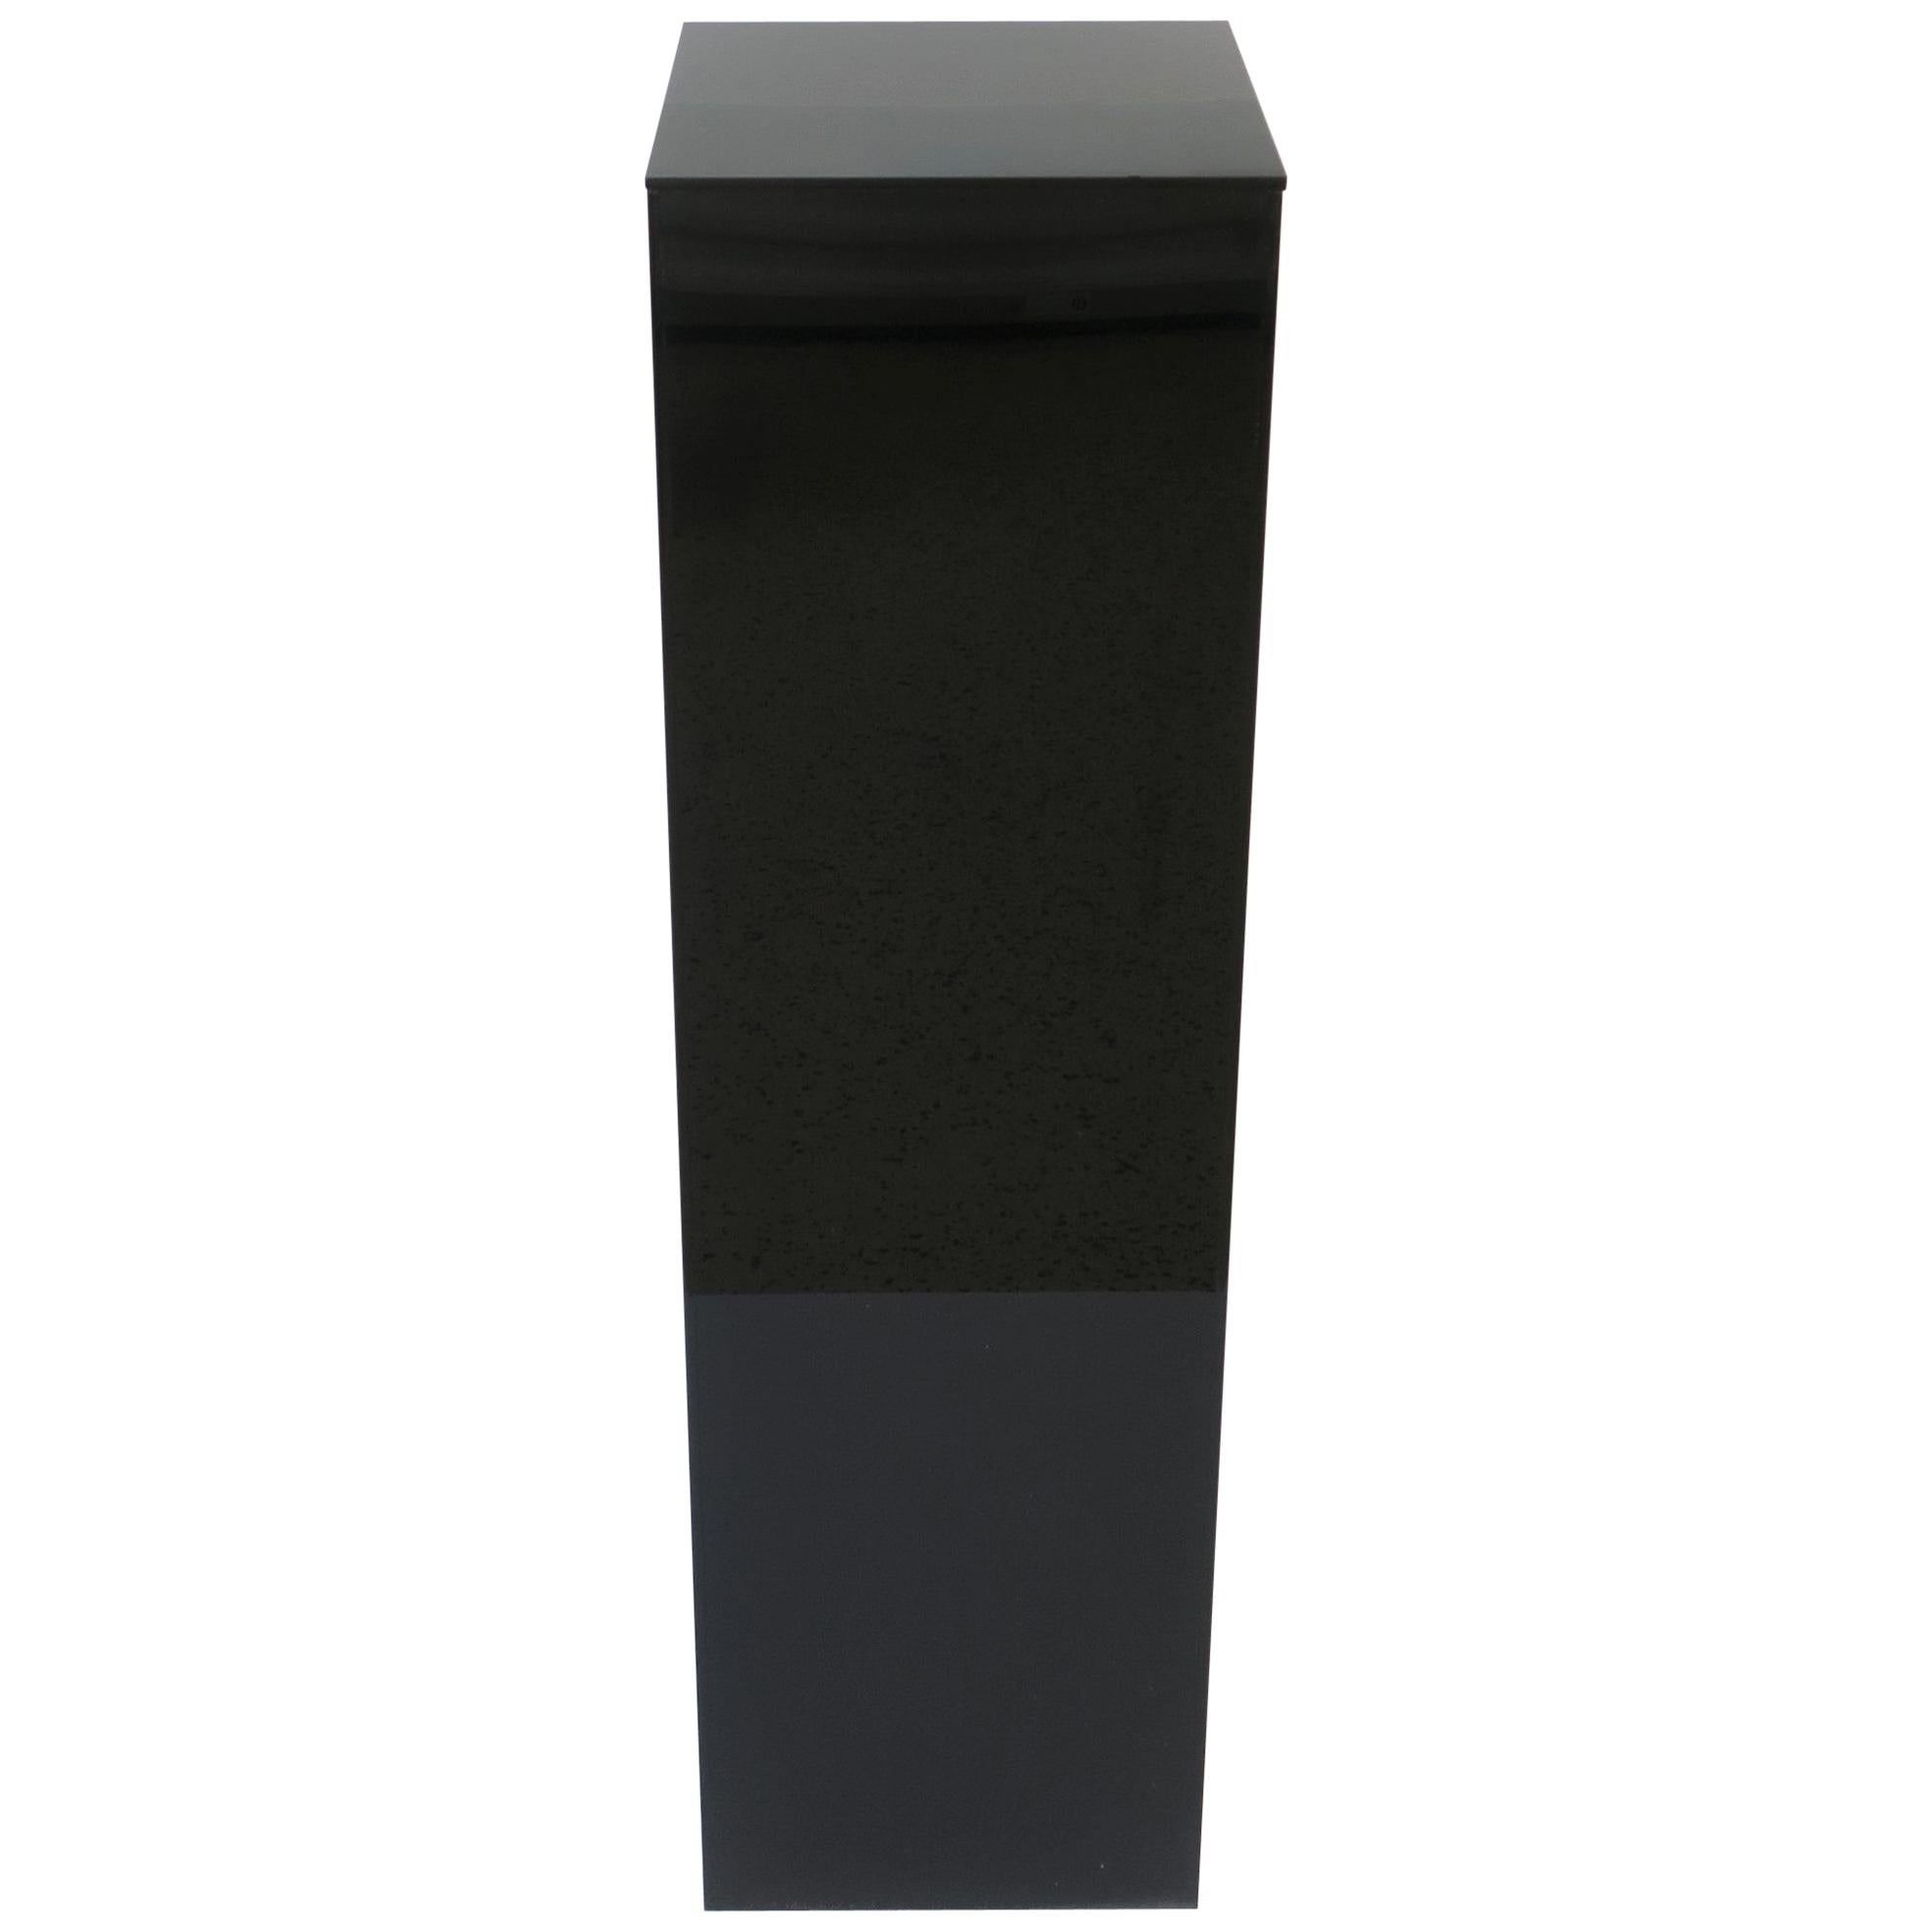 Black Acrylic Pedestal Column Stand